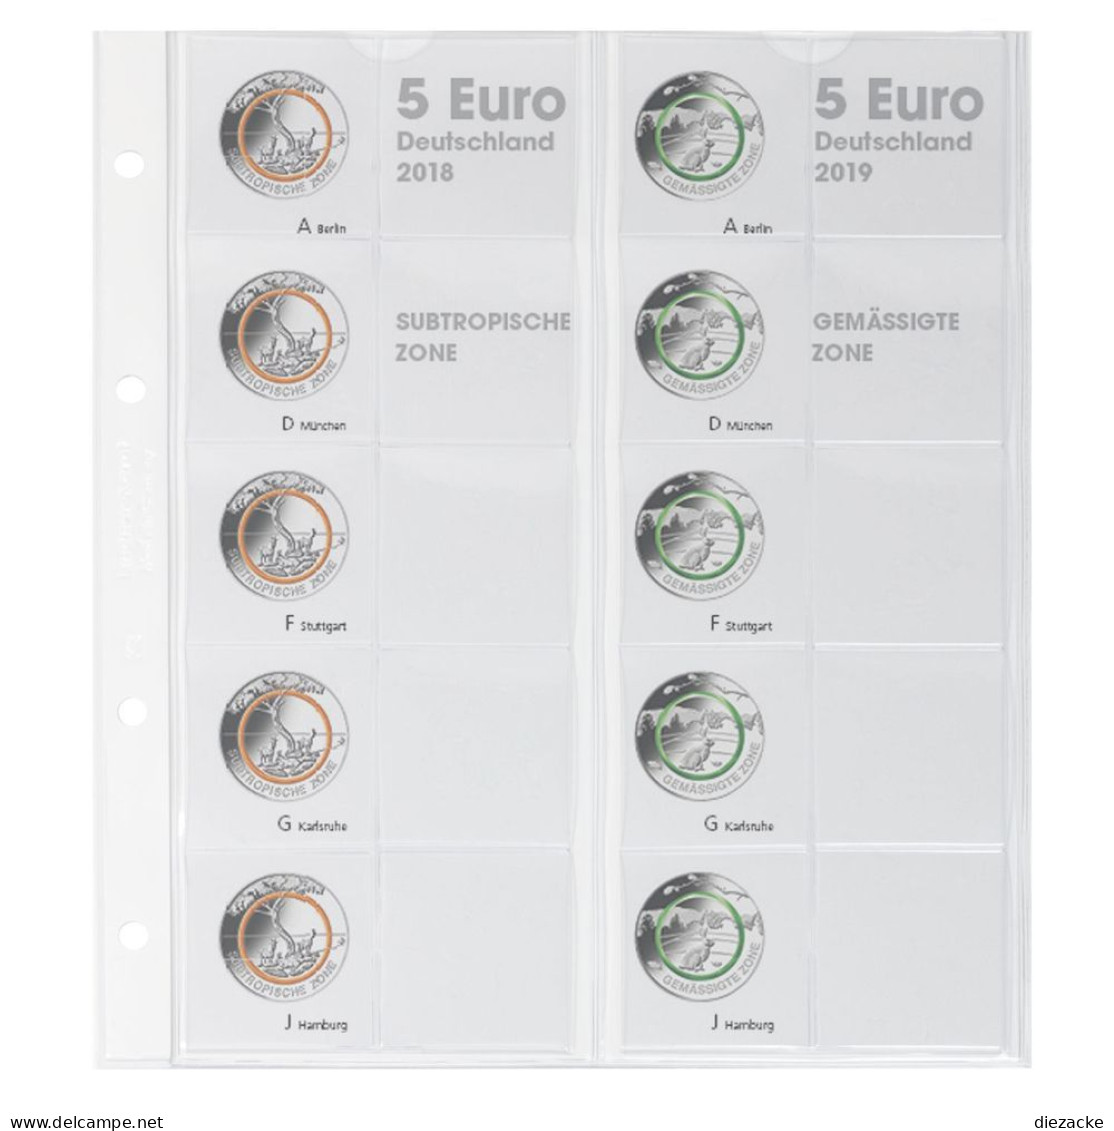 Lindner Vordruckblatt Karat Für 5 Euro-Münzen Polymerring 1119-2 Neu - Material